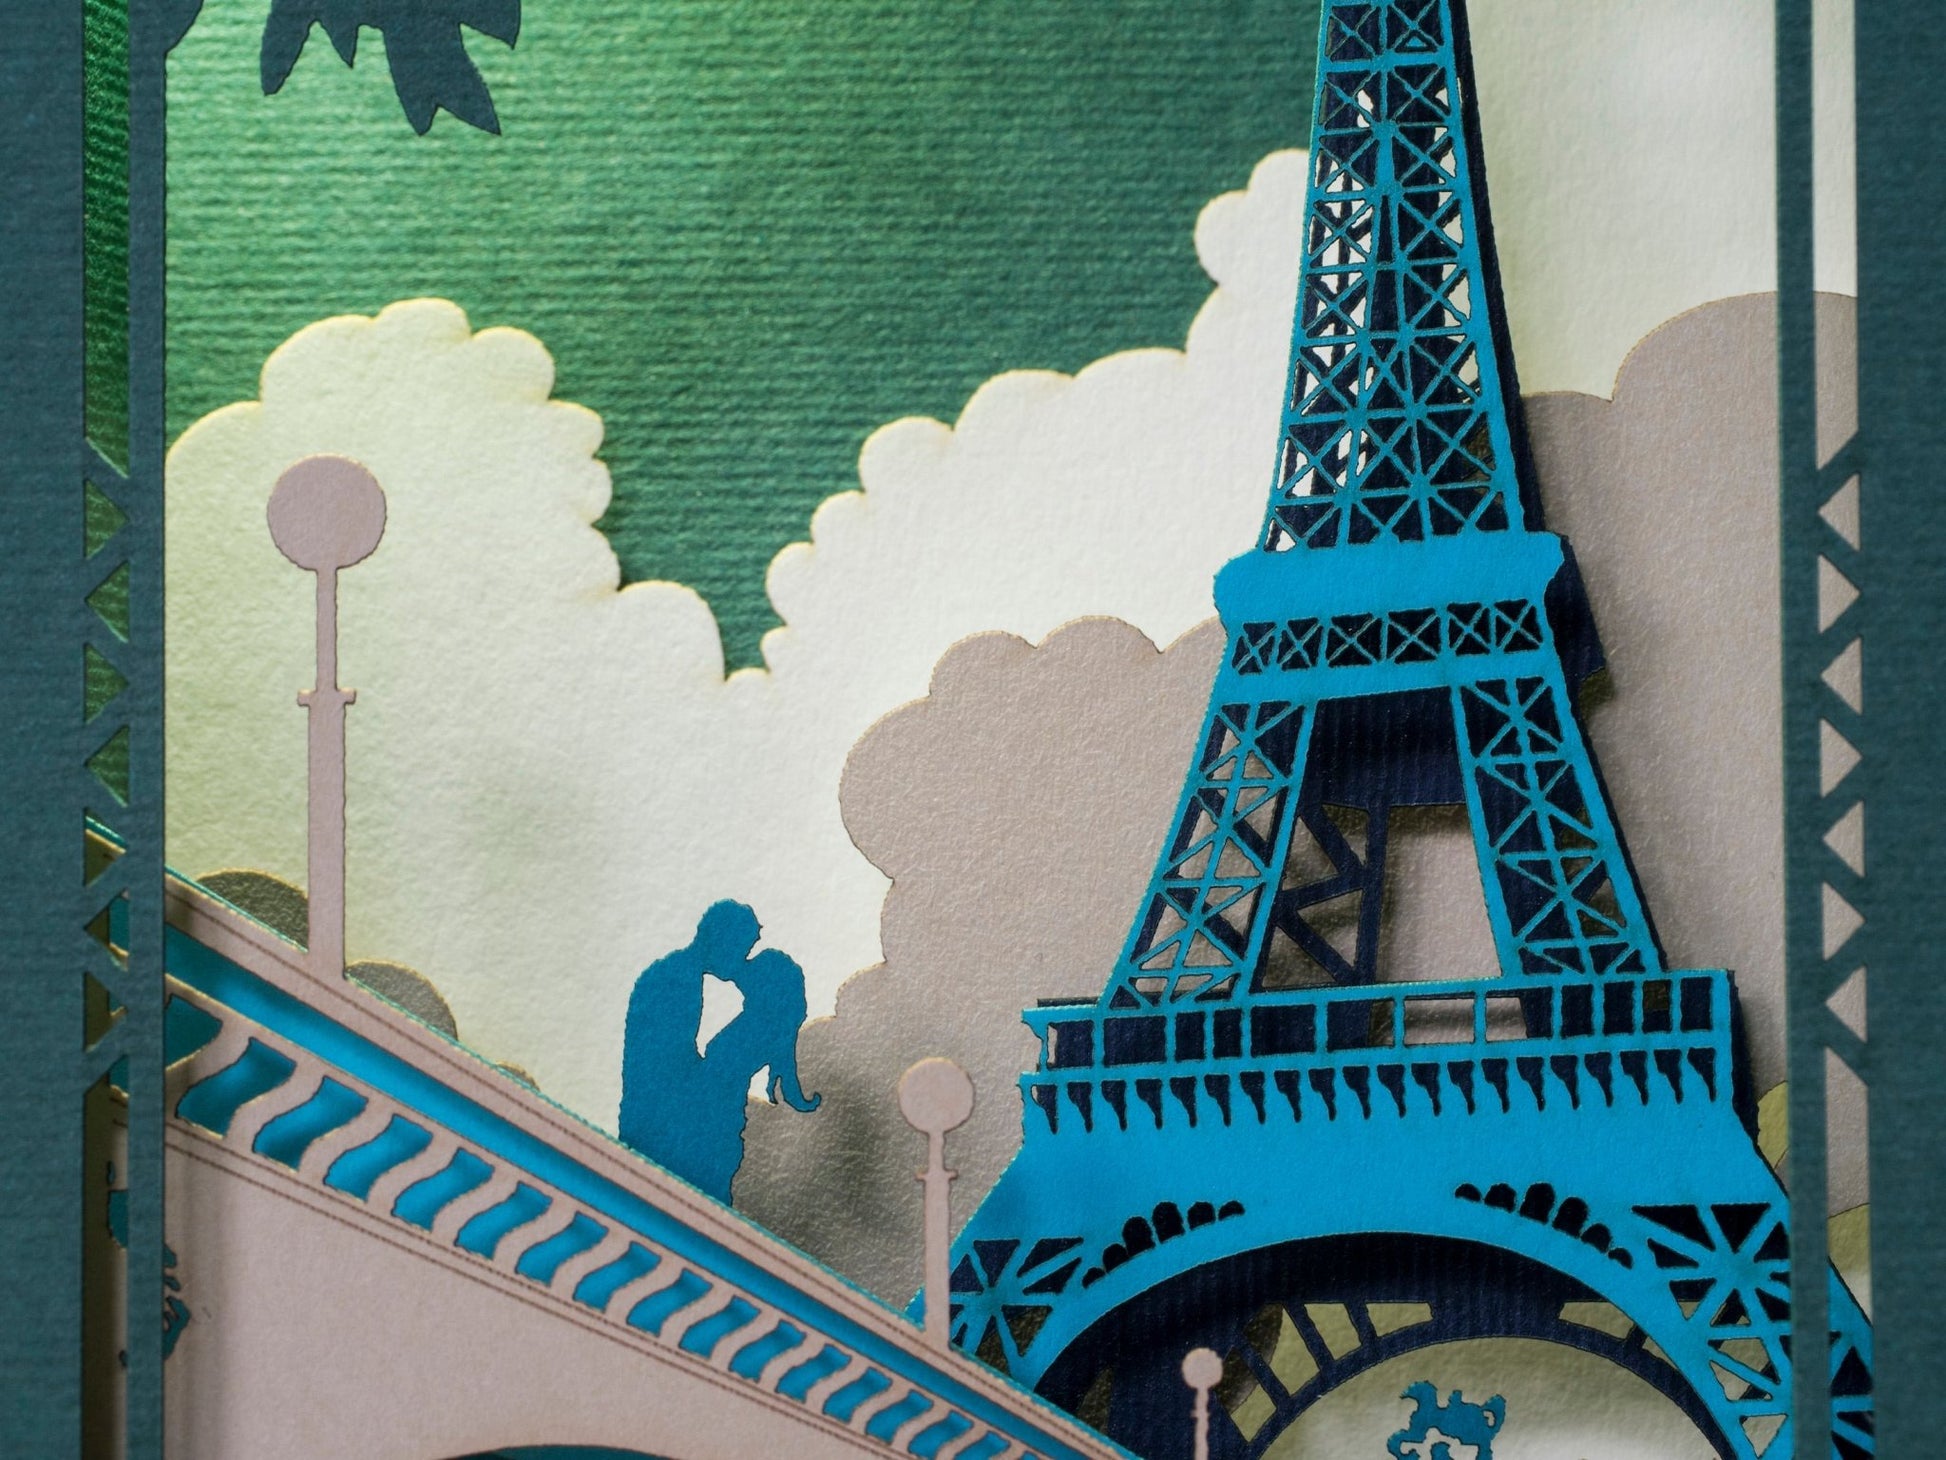 The Eiffel Tower, Paris, France pop-up card - ColibriGift